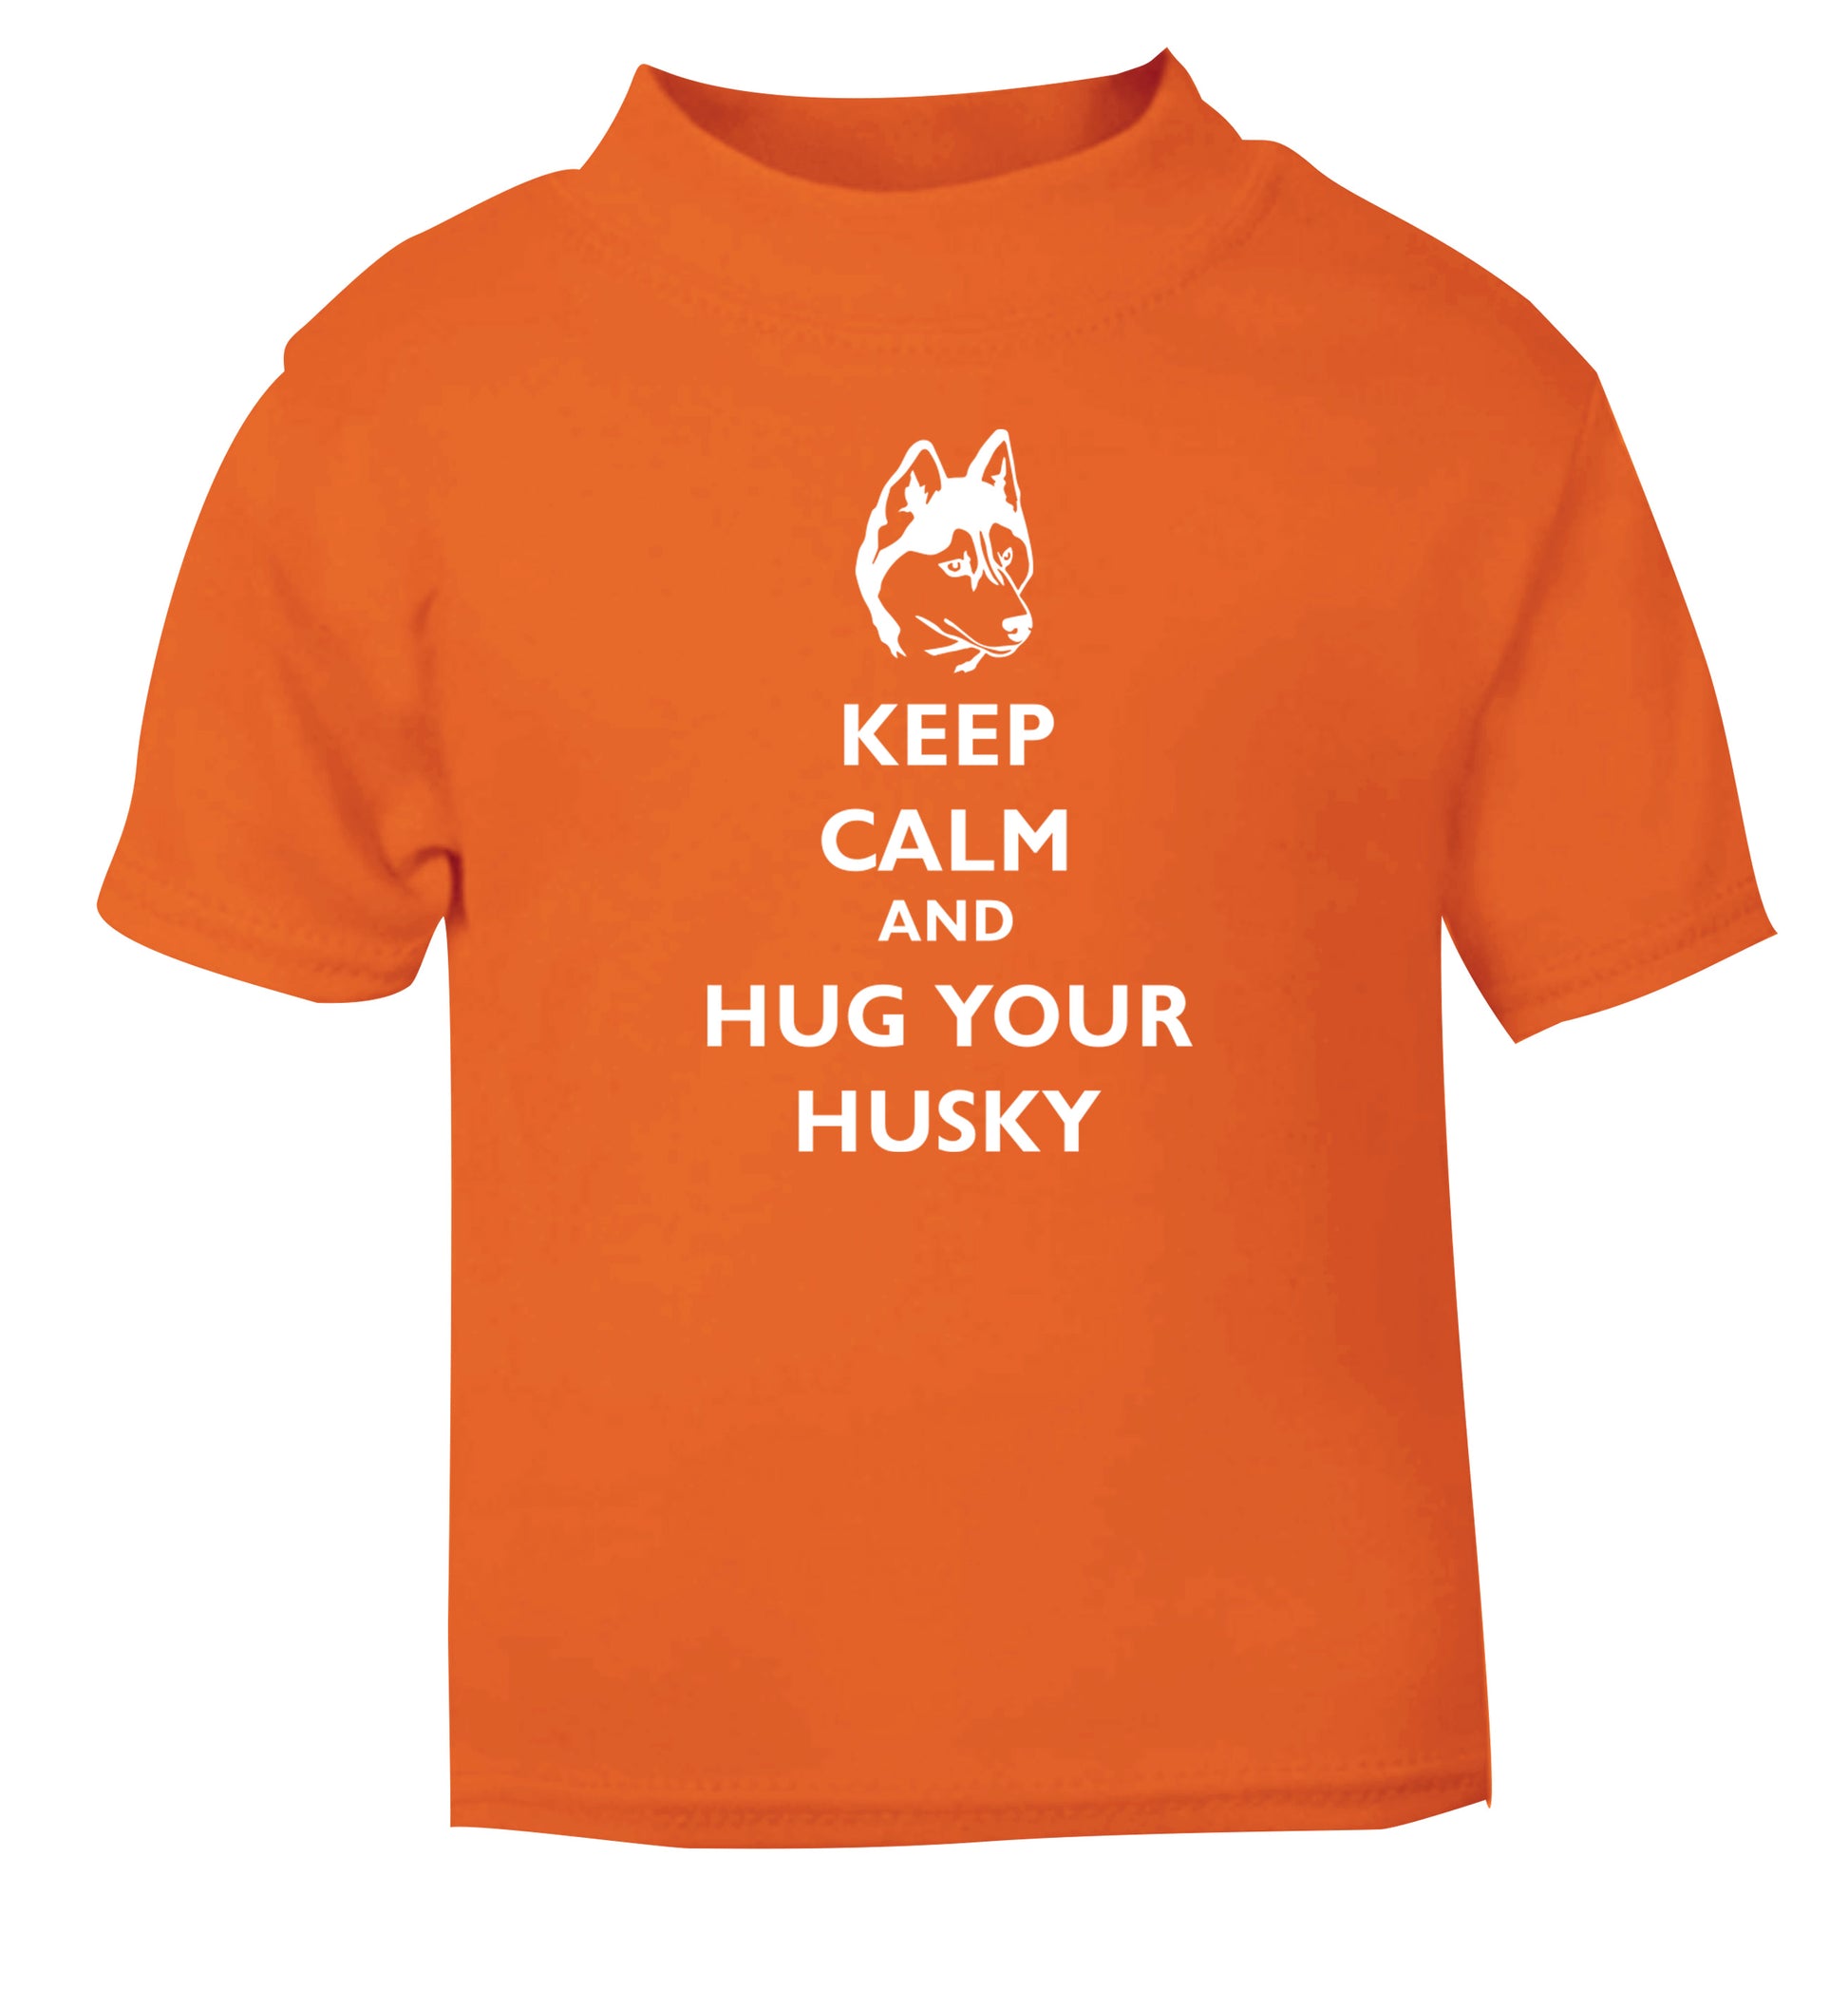 Keep calm and hug your husky orange Baby Toddler Tshirt 2 Years